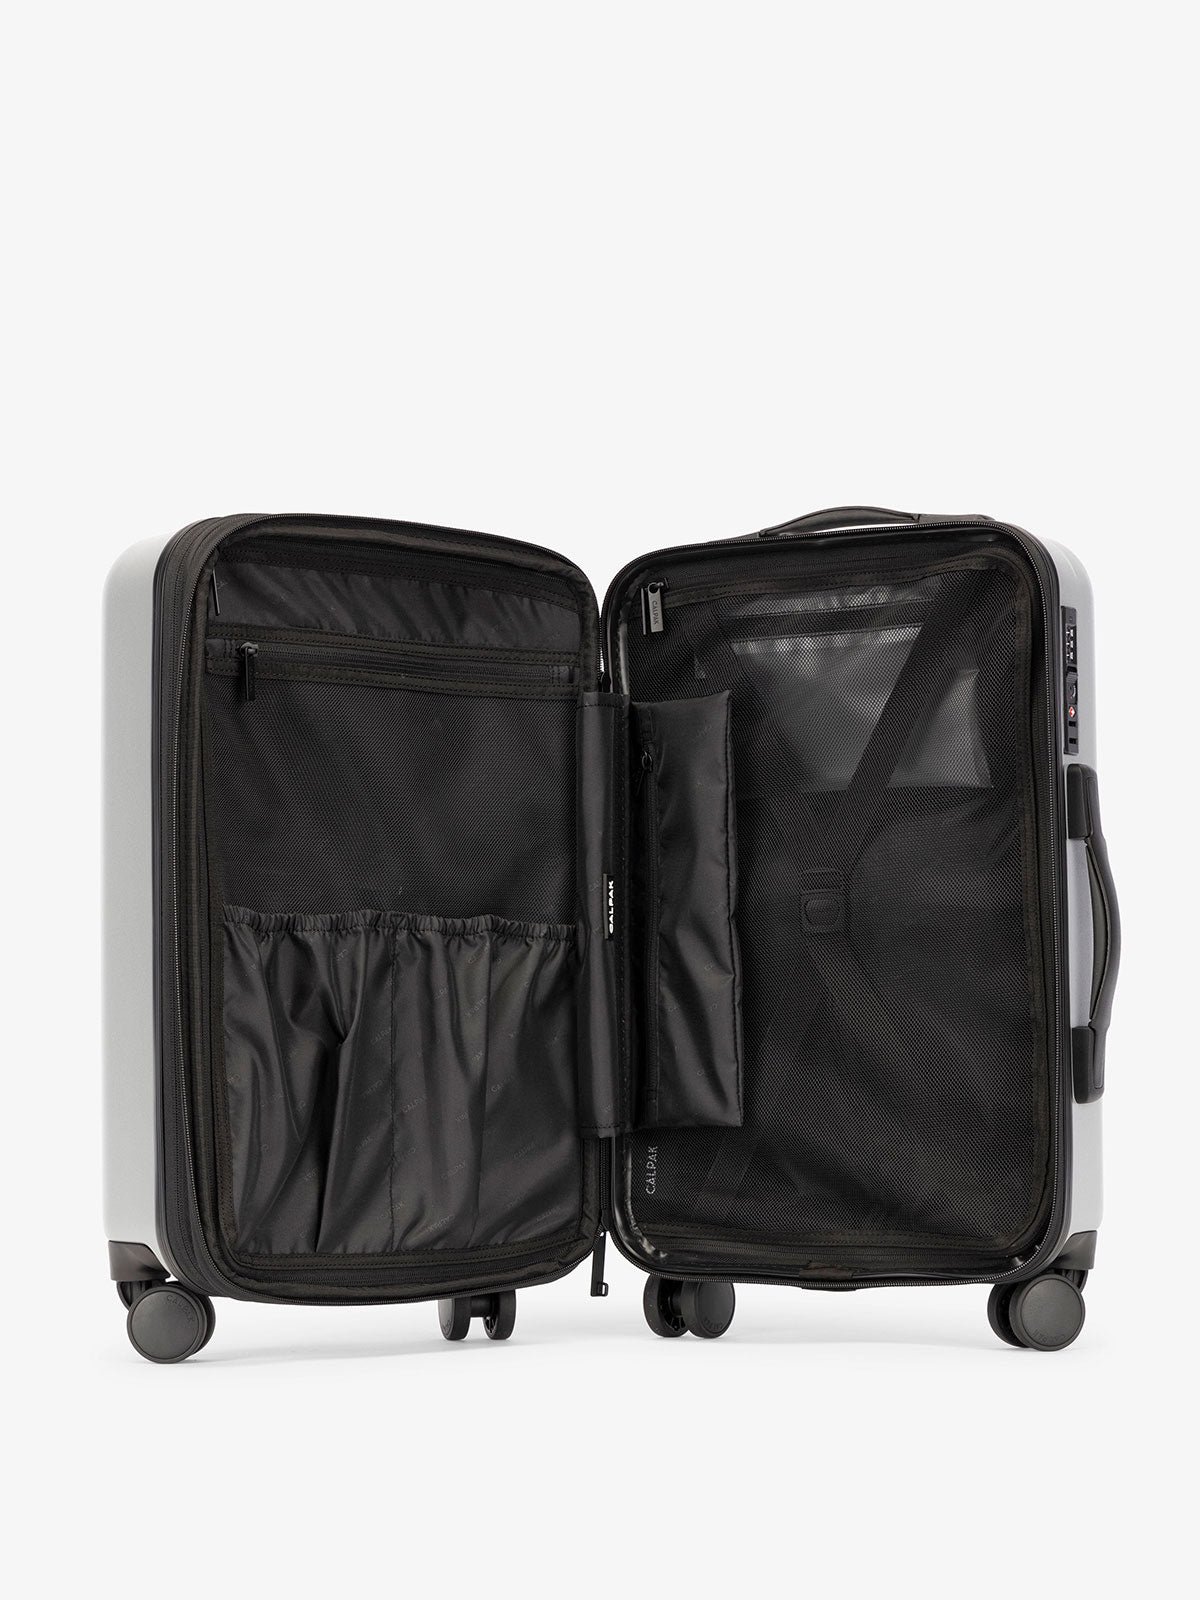 CALPAK Luggage bundle interior compartments in gray